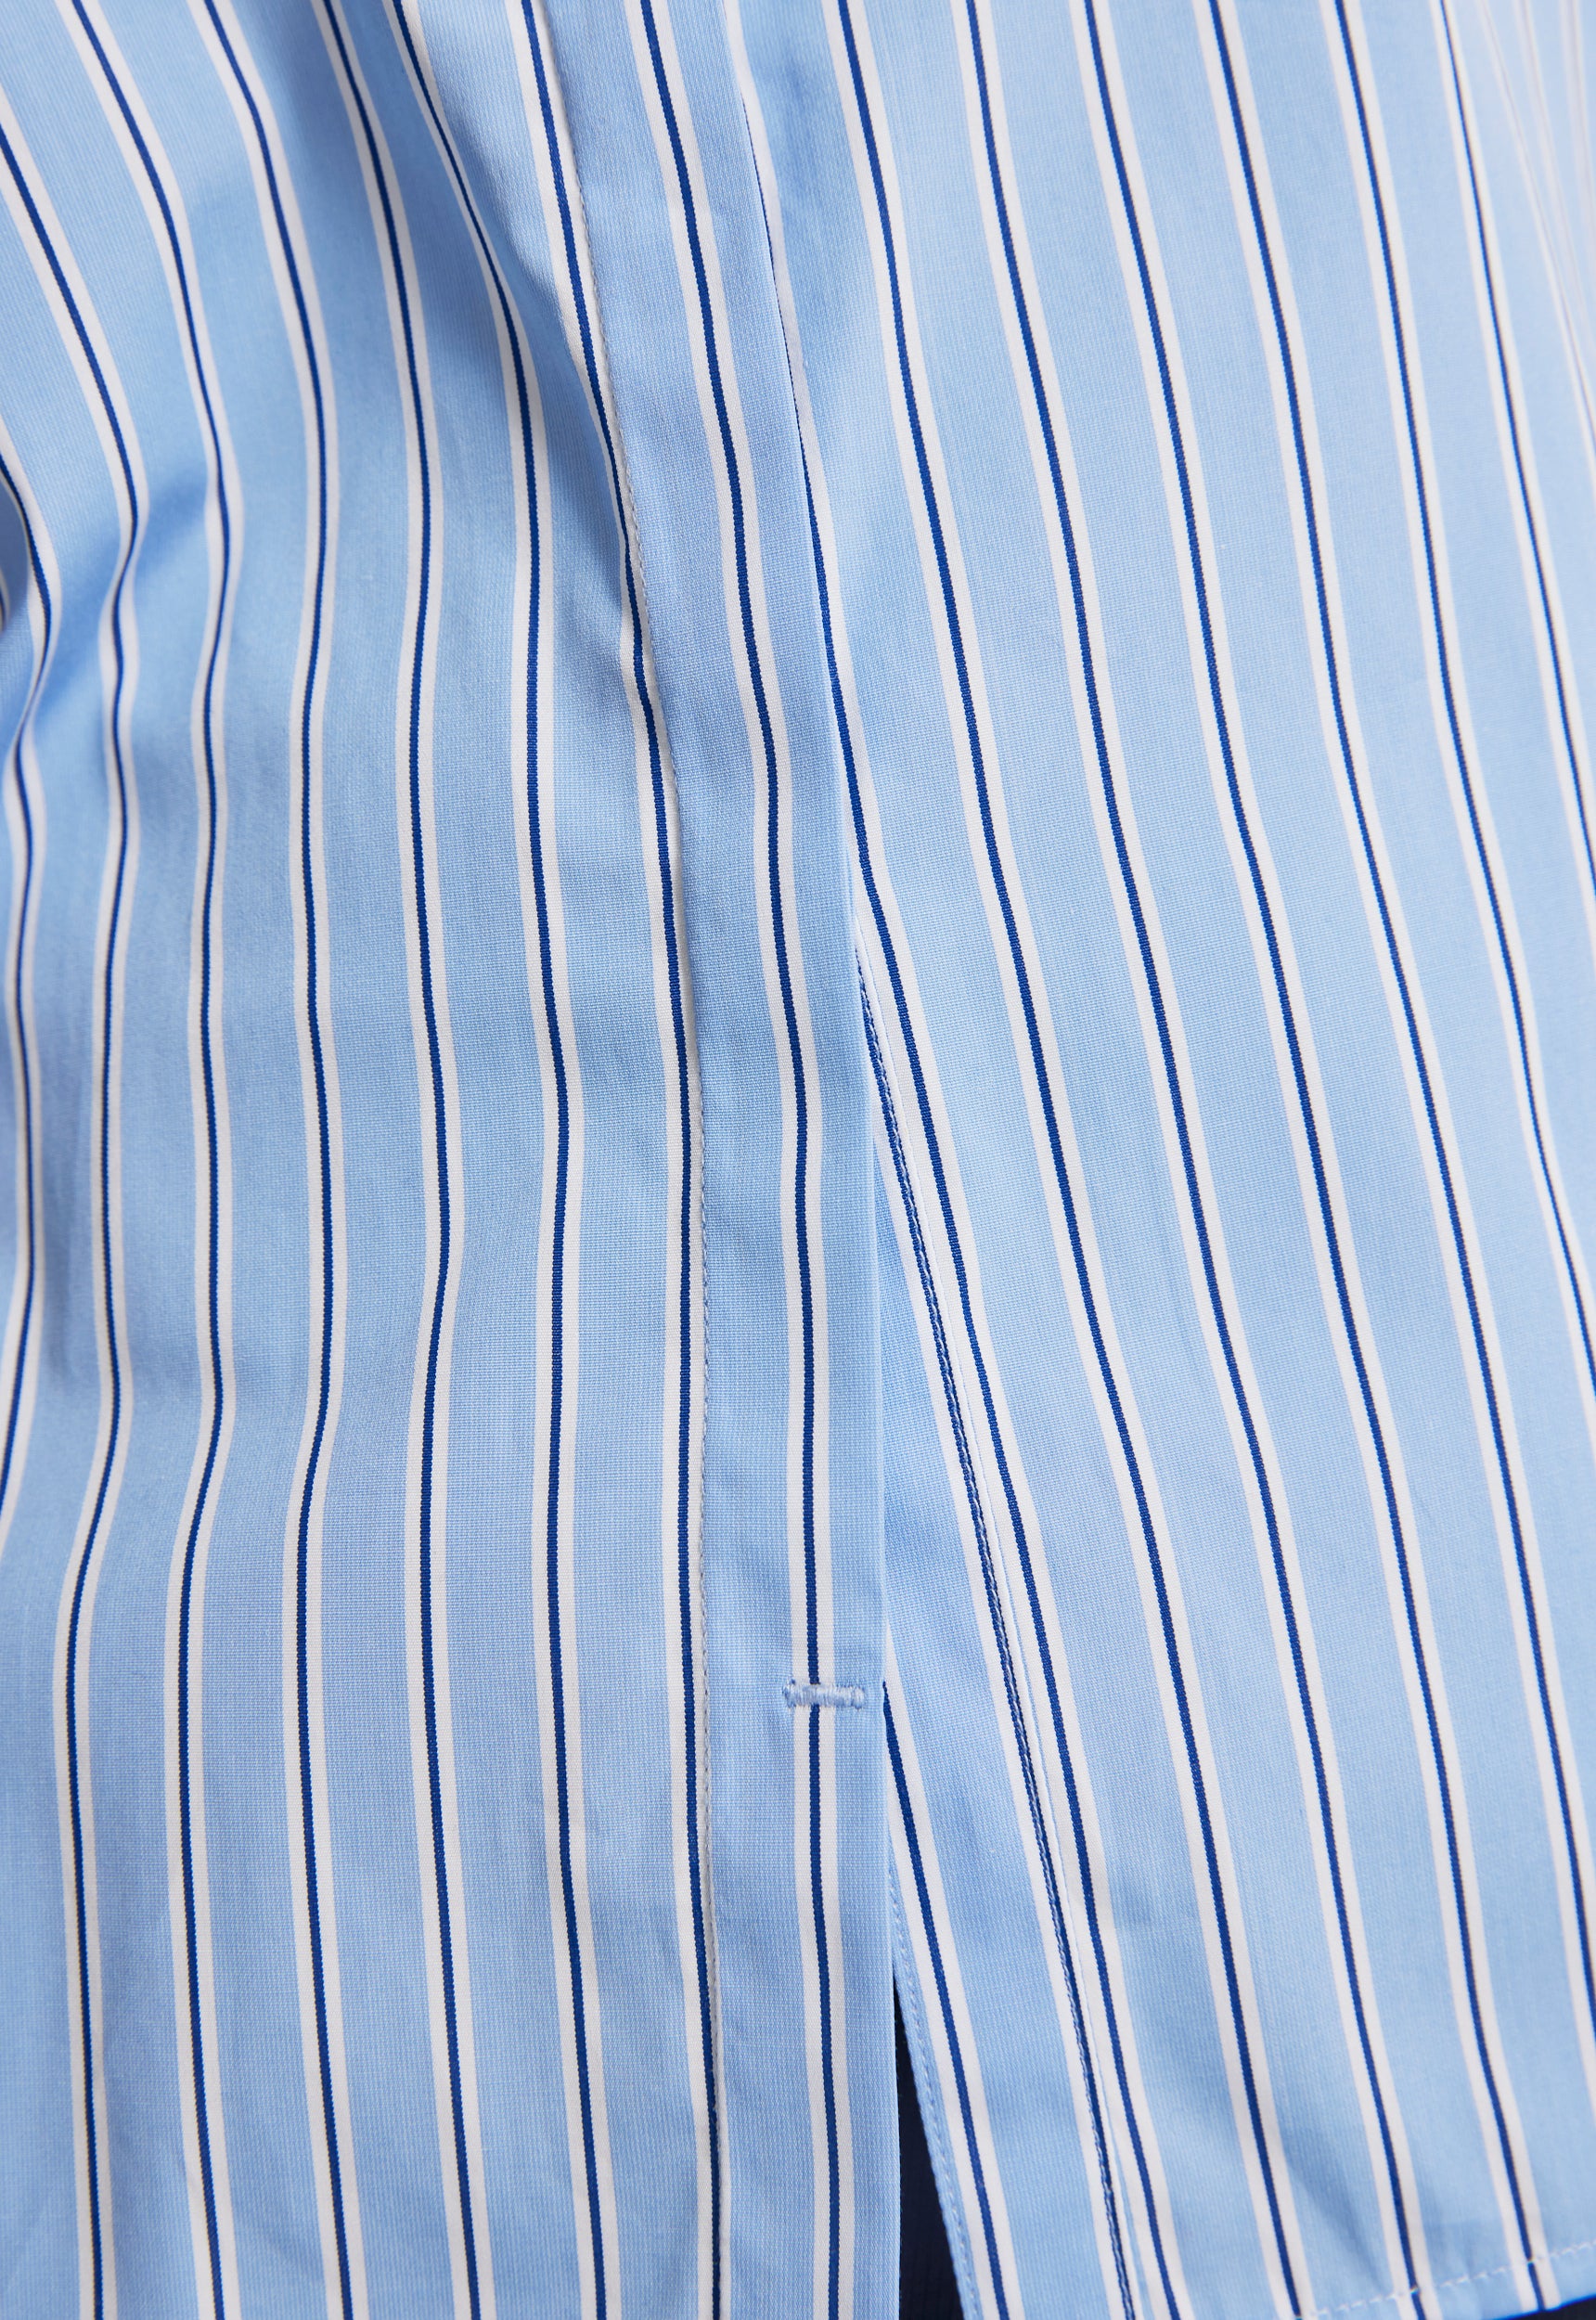 City Cotton Shirt in Blue/Navy/Stripe